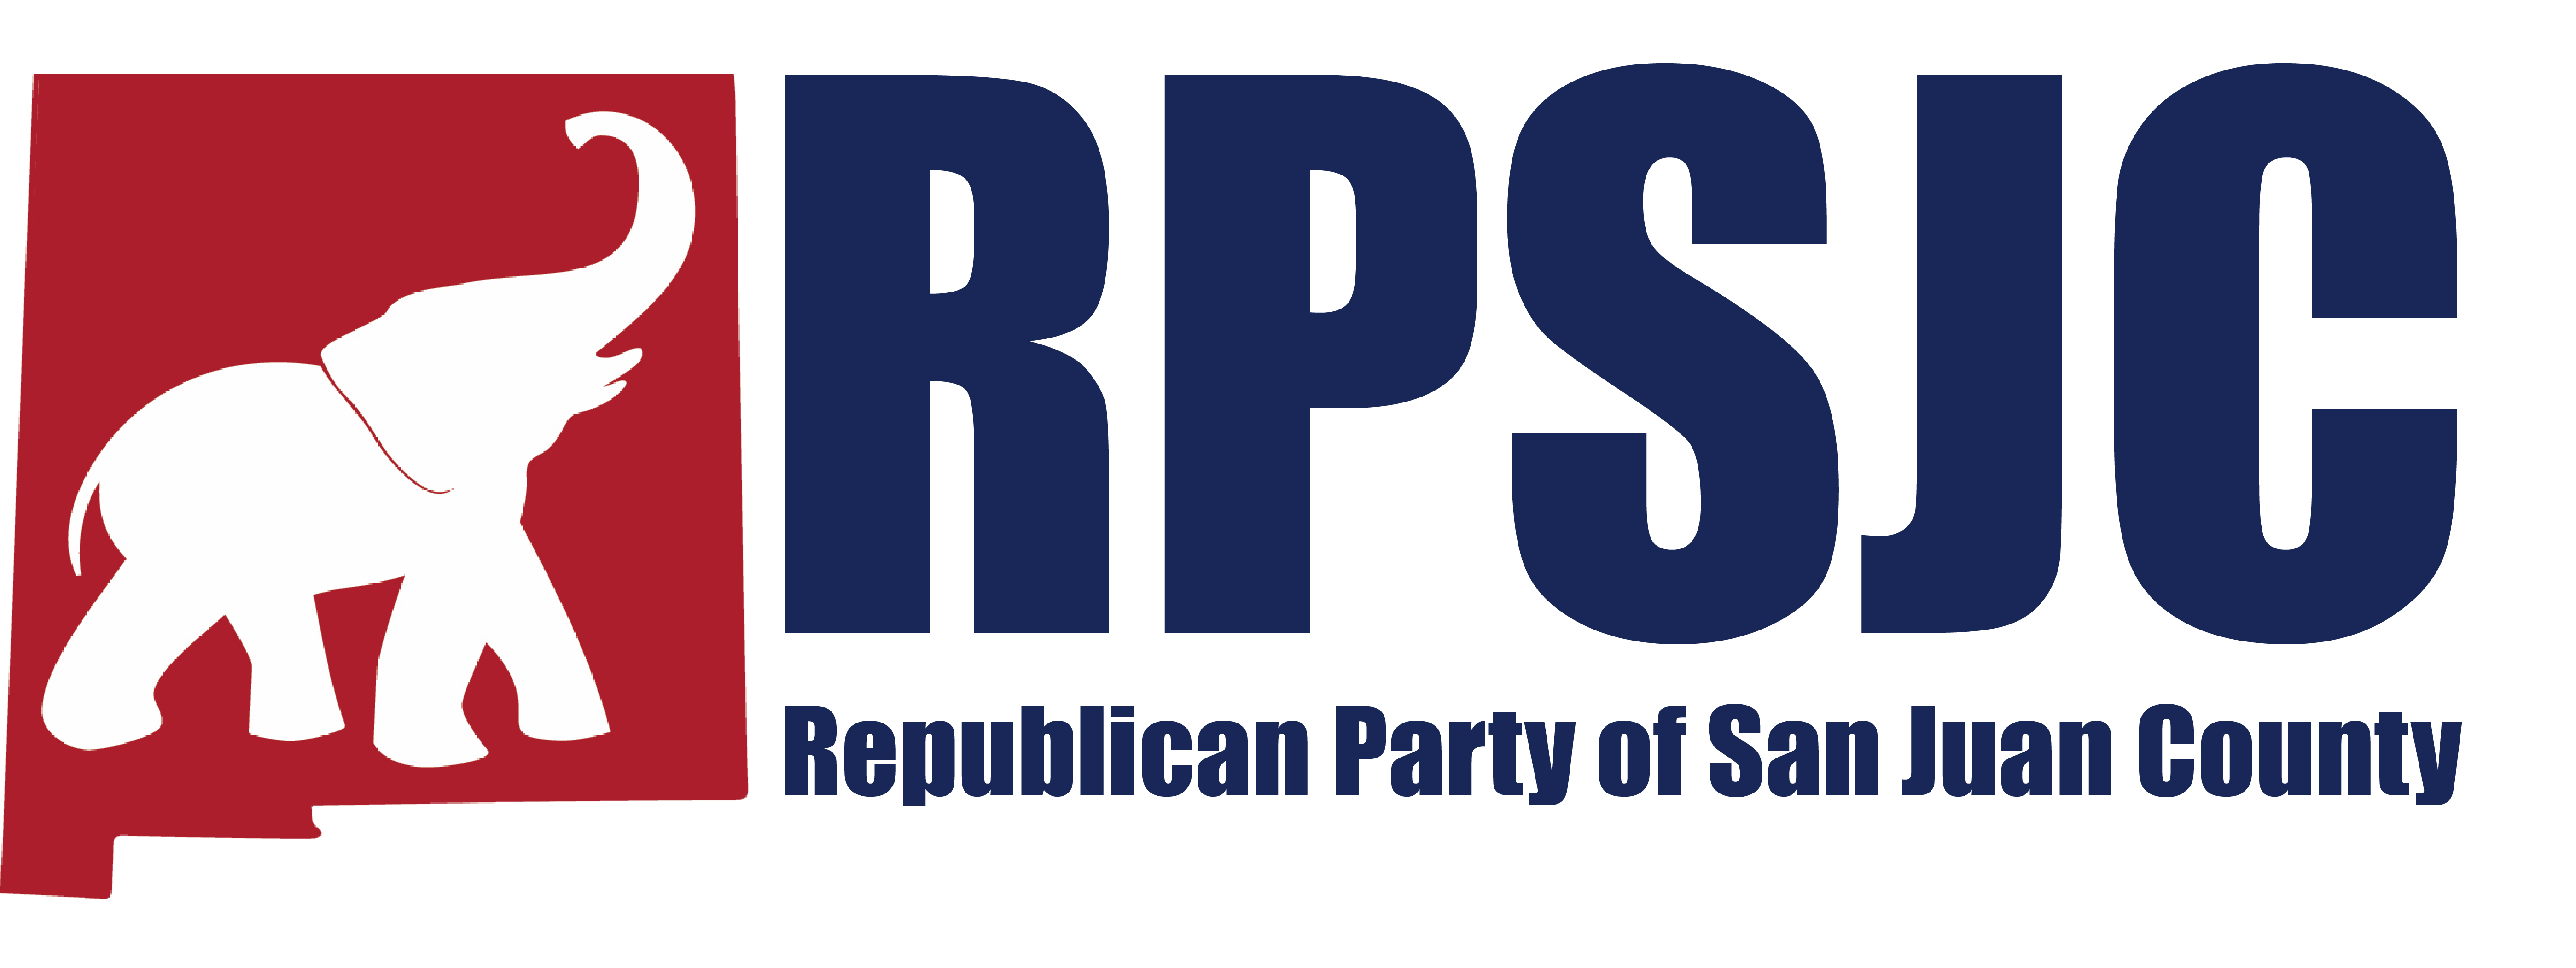 Republican Party of San Juan County logo